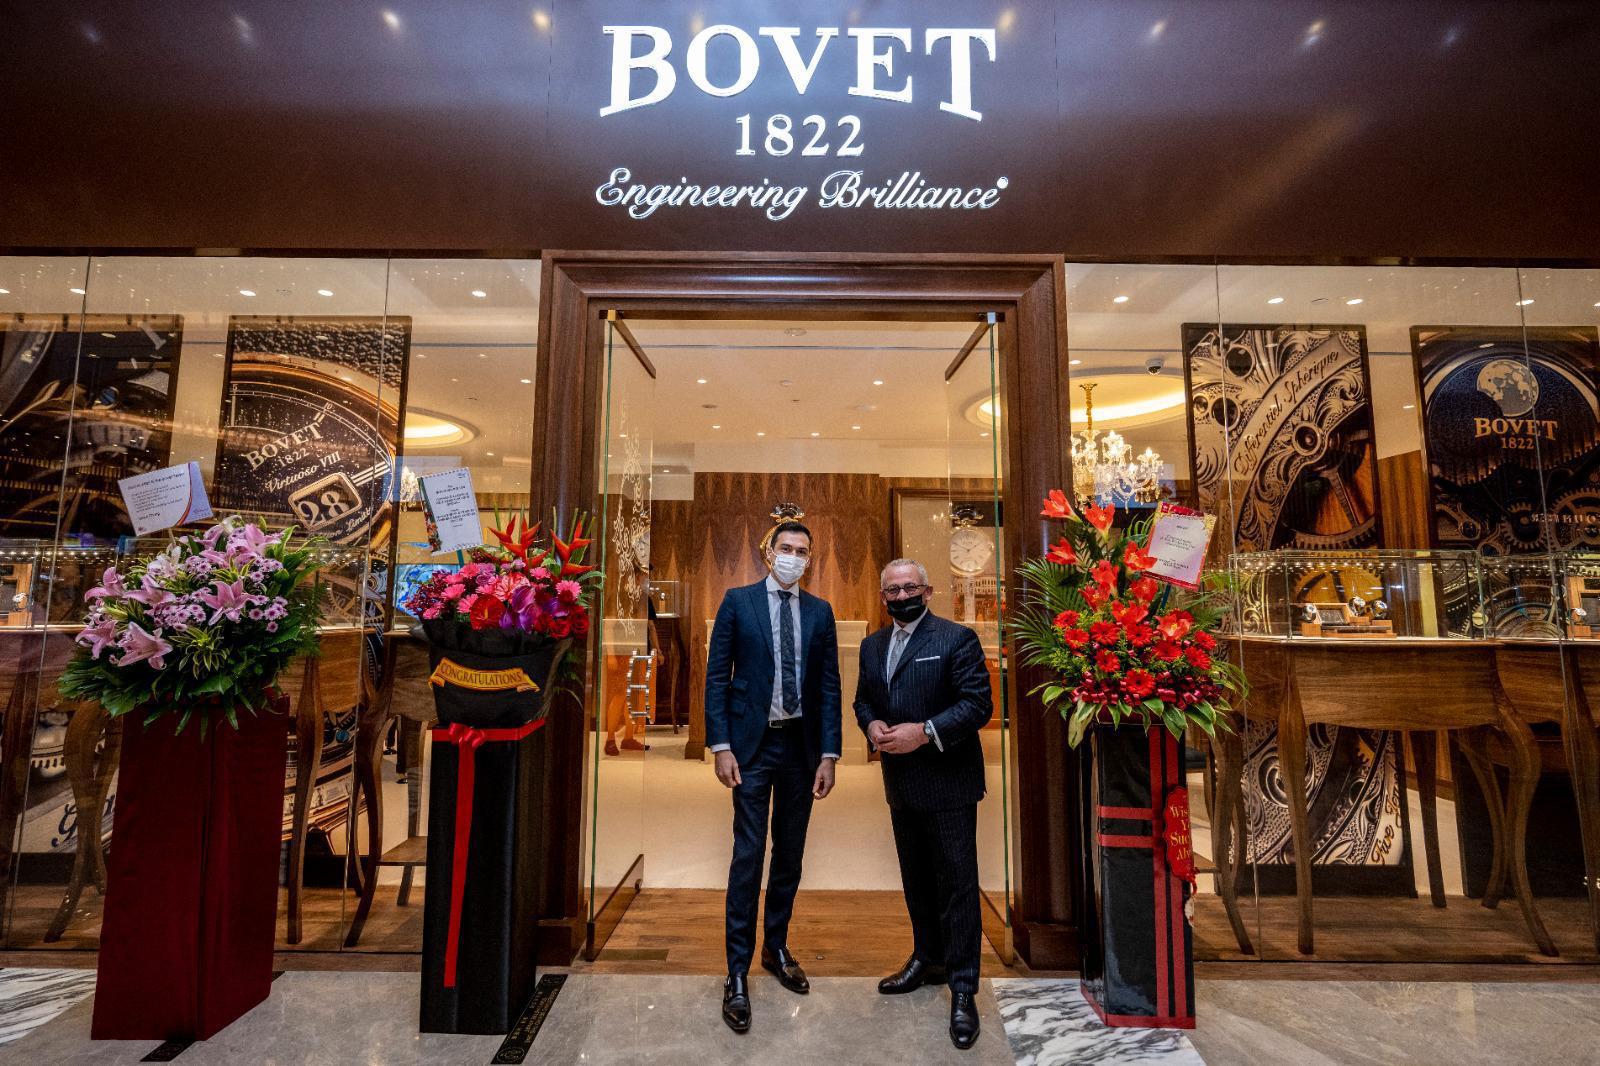 The House of BOVET Congratulates the extraordinary Singapore Boutique team